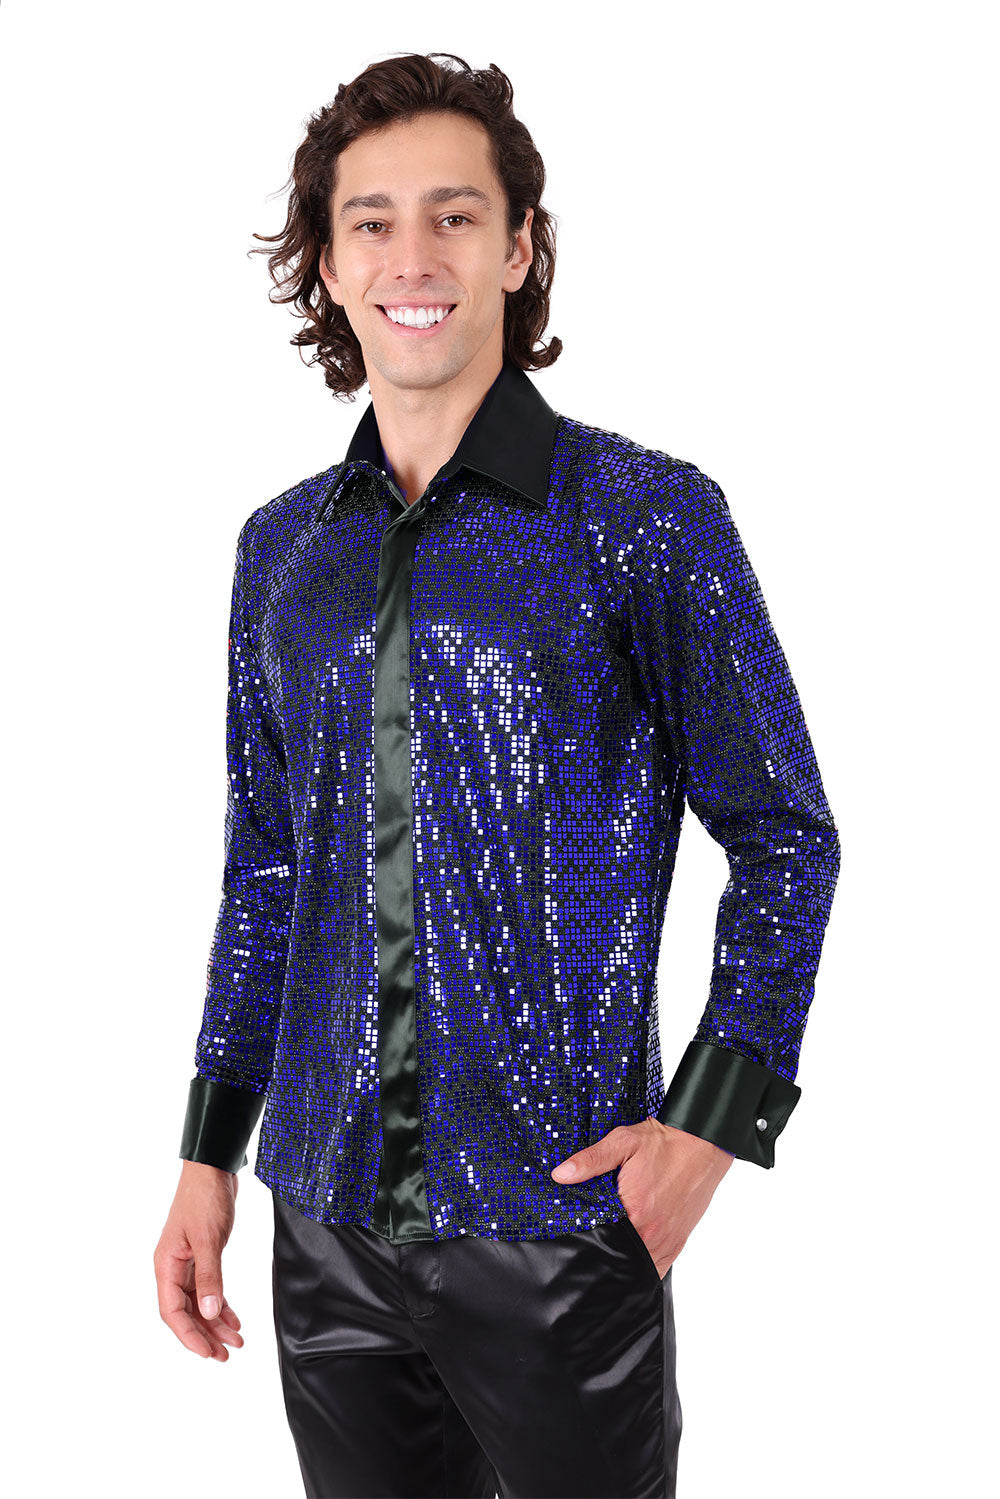 Barabas Men's French Cuff Glittery Sparkly Striped Shirt 2FCS1006 Blue